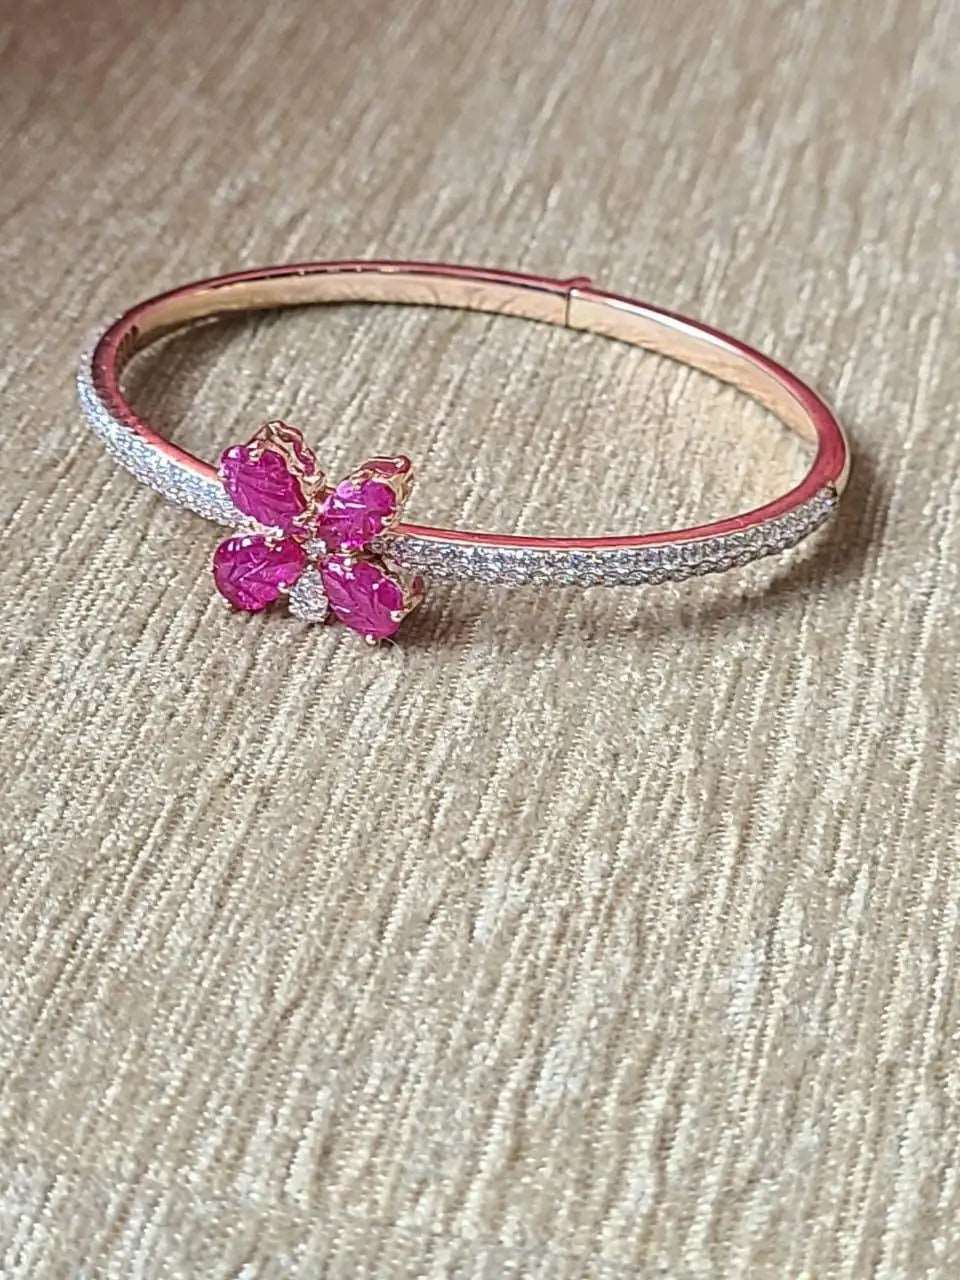 Carved Ruby 3.04 Carats & Diamonds Modern/Bangle Bracelet Set in 18K Rose Gold